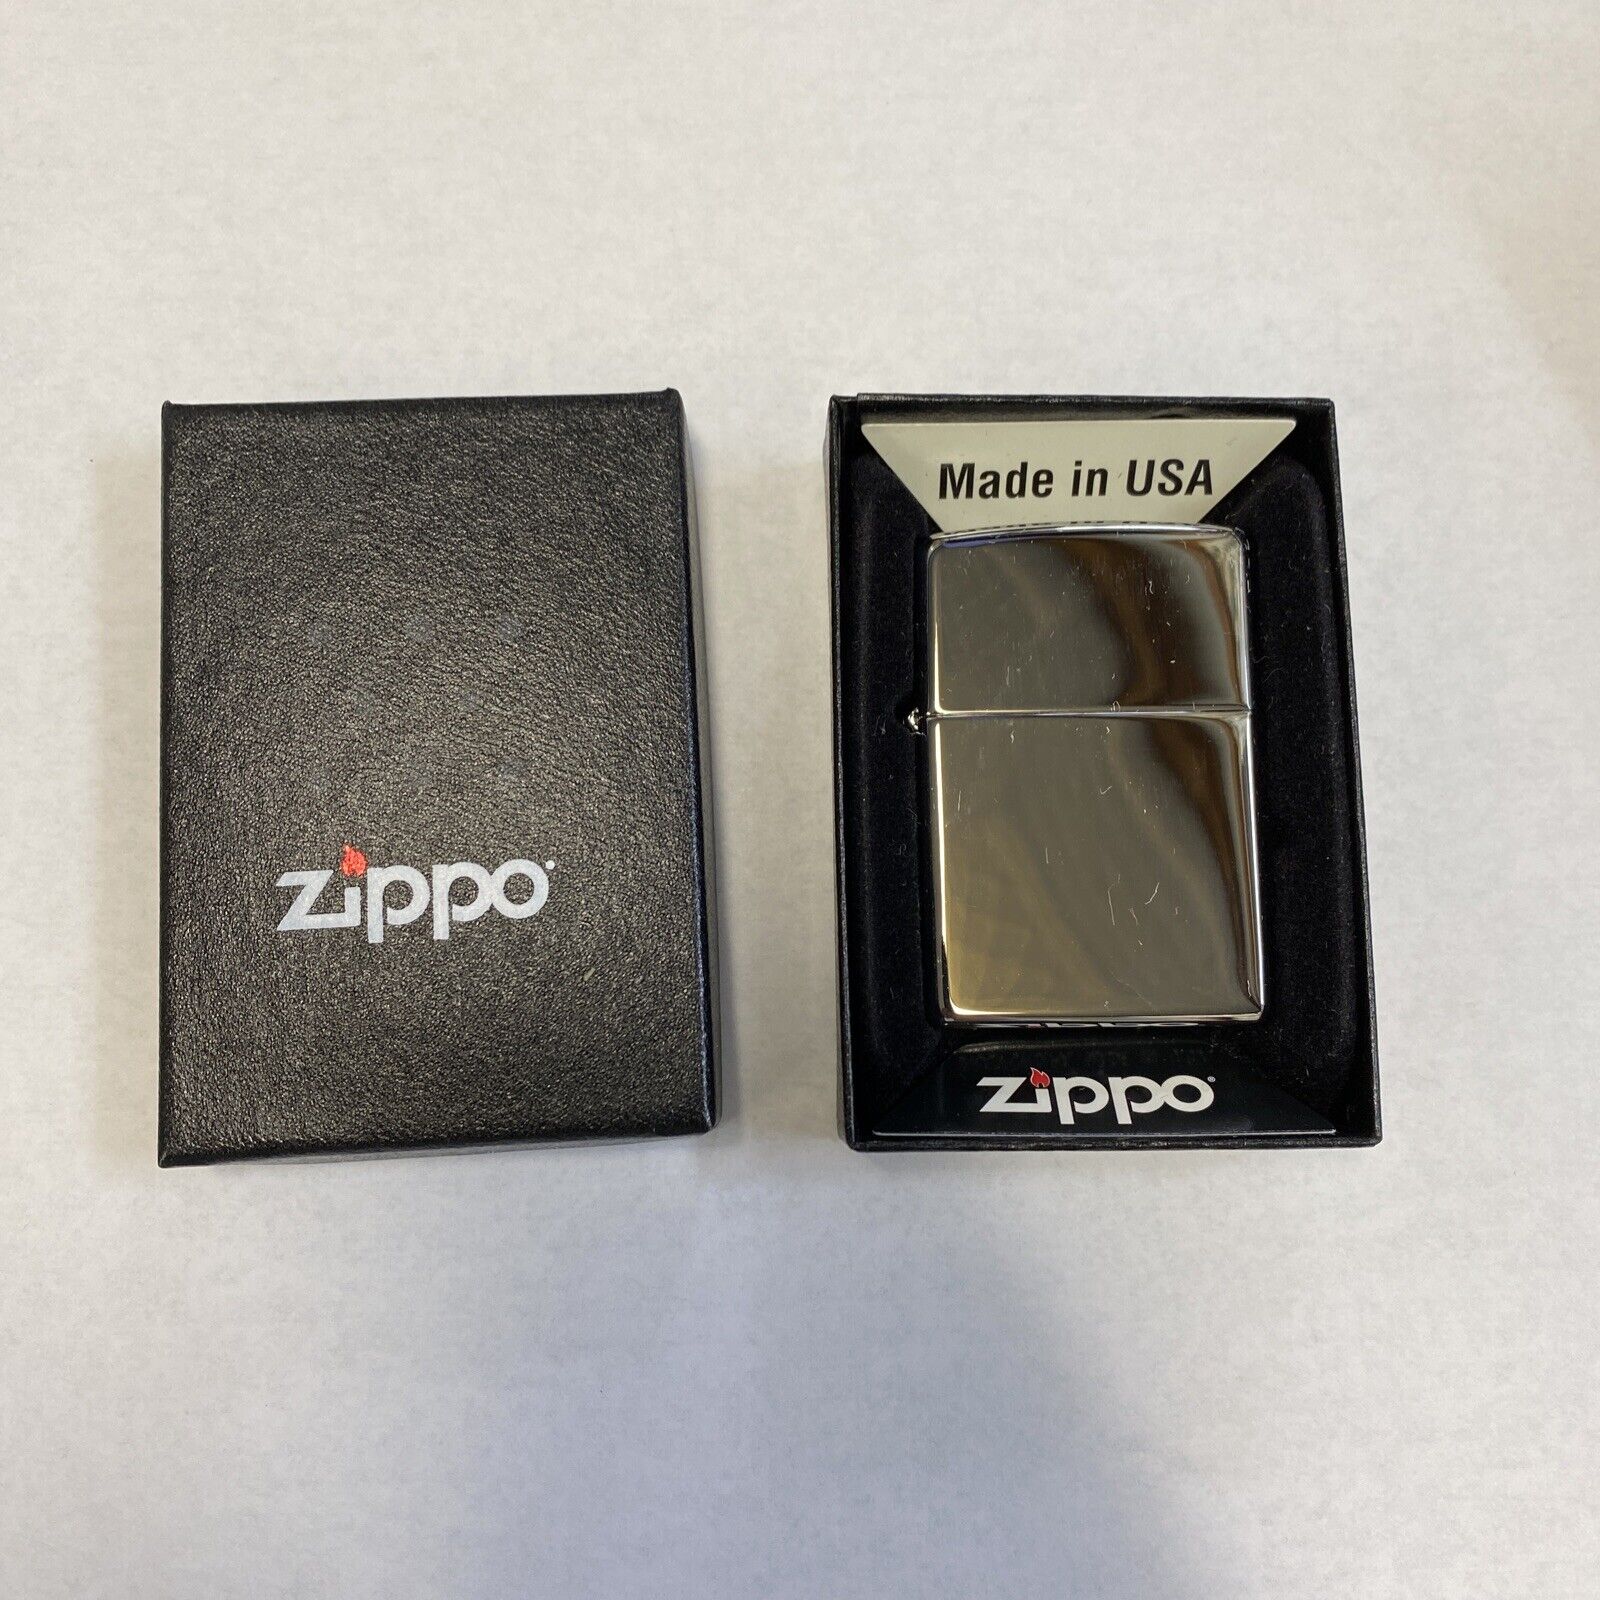 Zippo Lighter 250 reg Polish Crome New in box